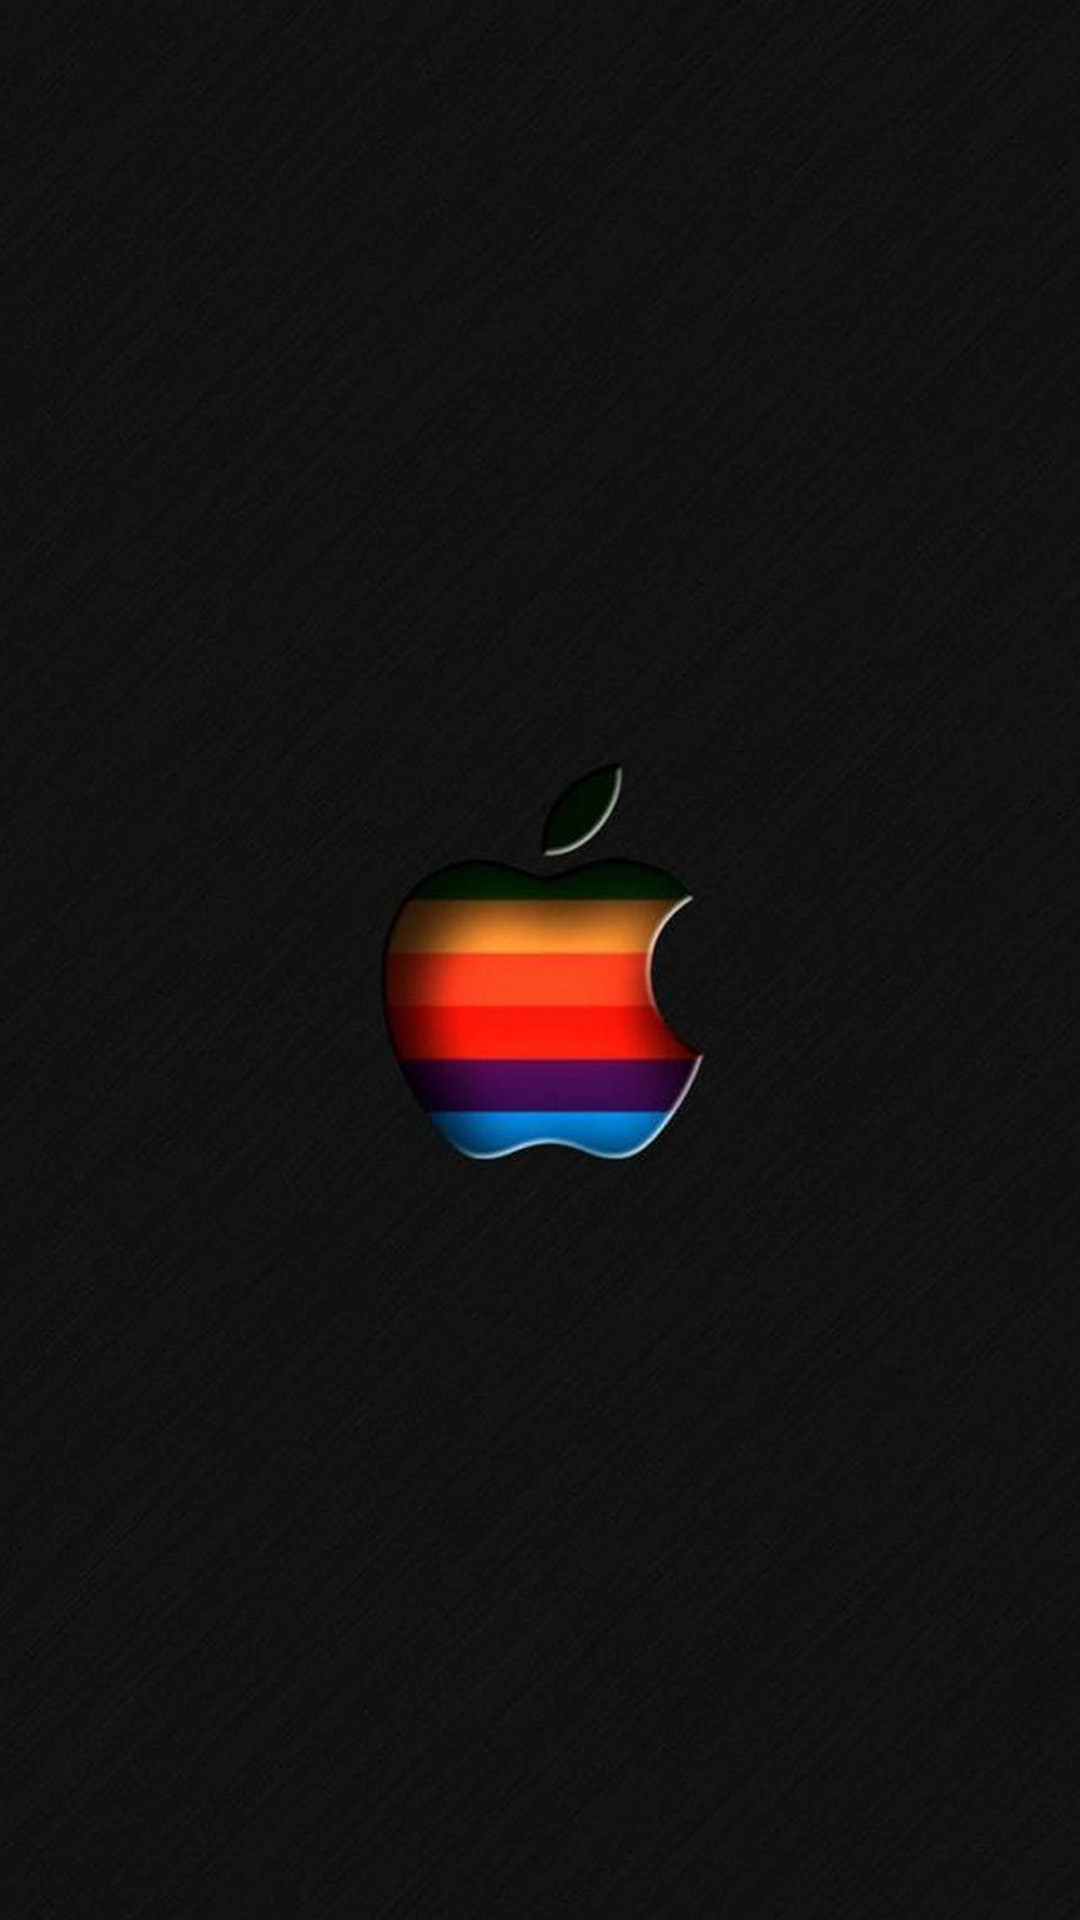 35 Gambar Apple Logo Wallpaper Hd Iphone 7 terbaru 2020